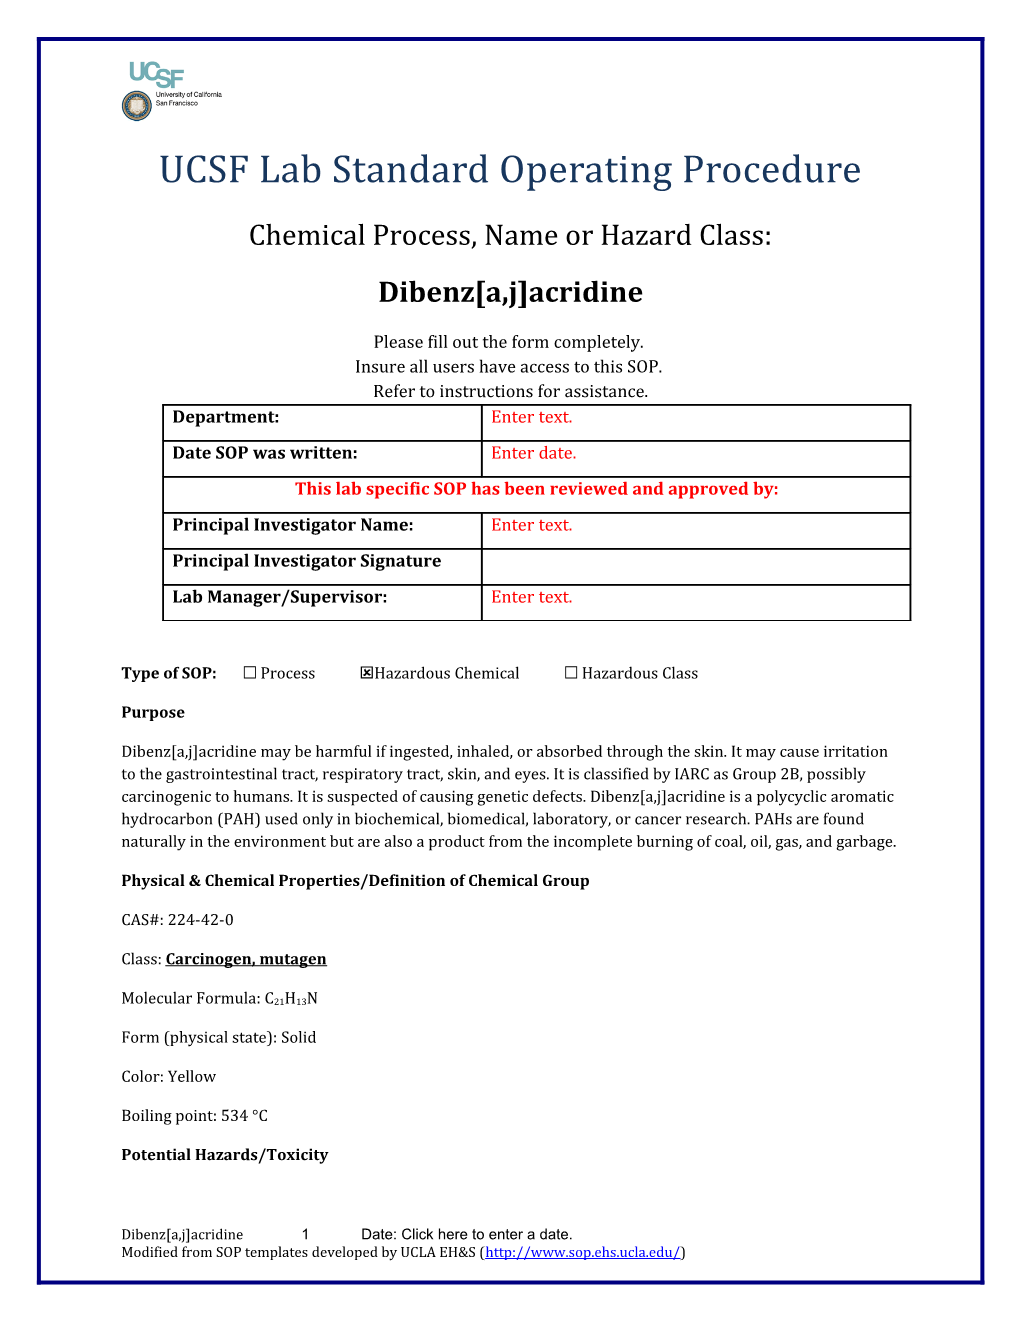 UCSF Lab Standard Operating Procedure s46